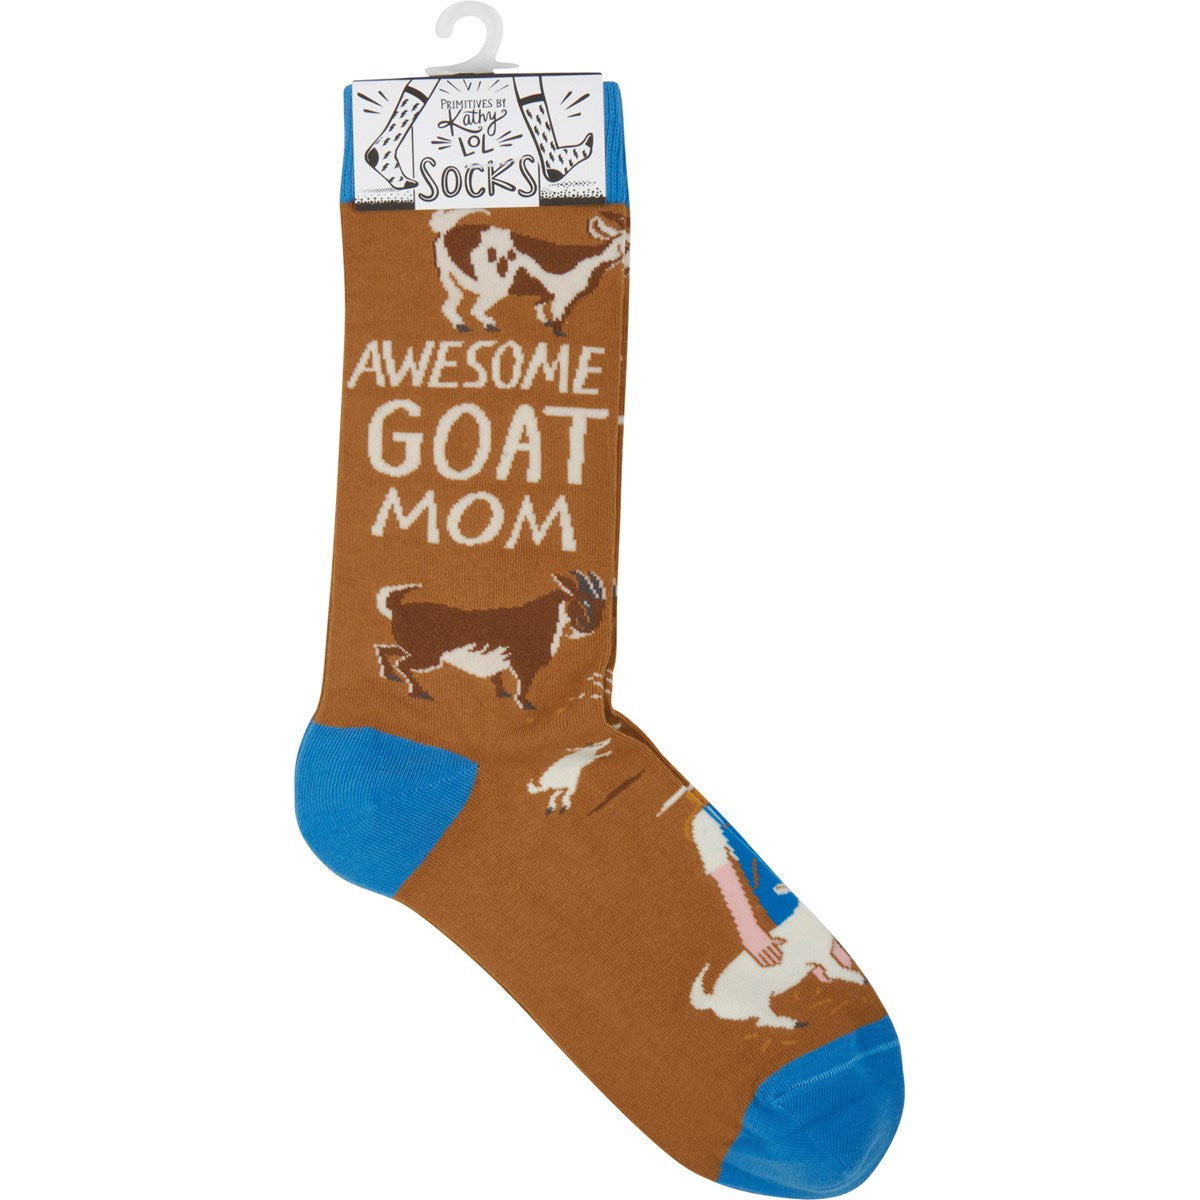 Awesome Goat Mom Fun Novelty Socks